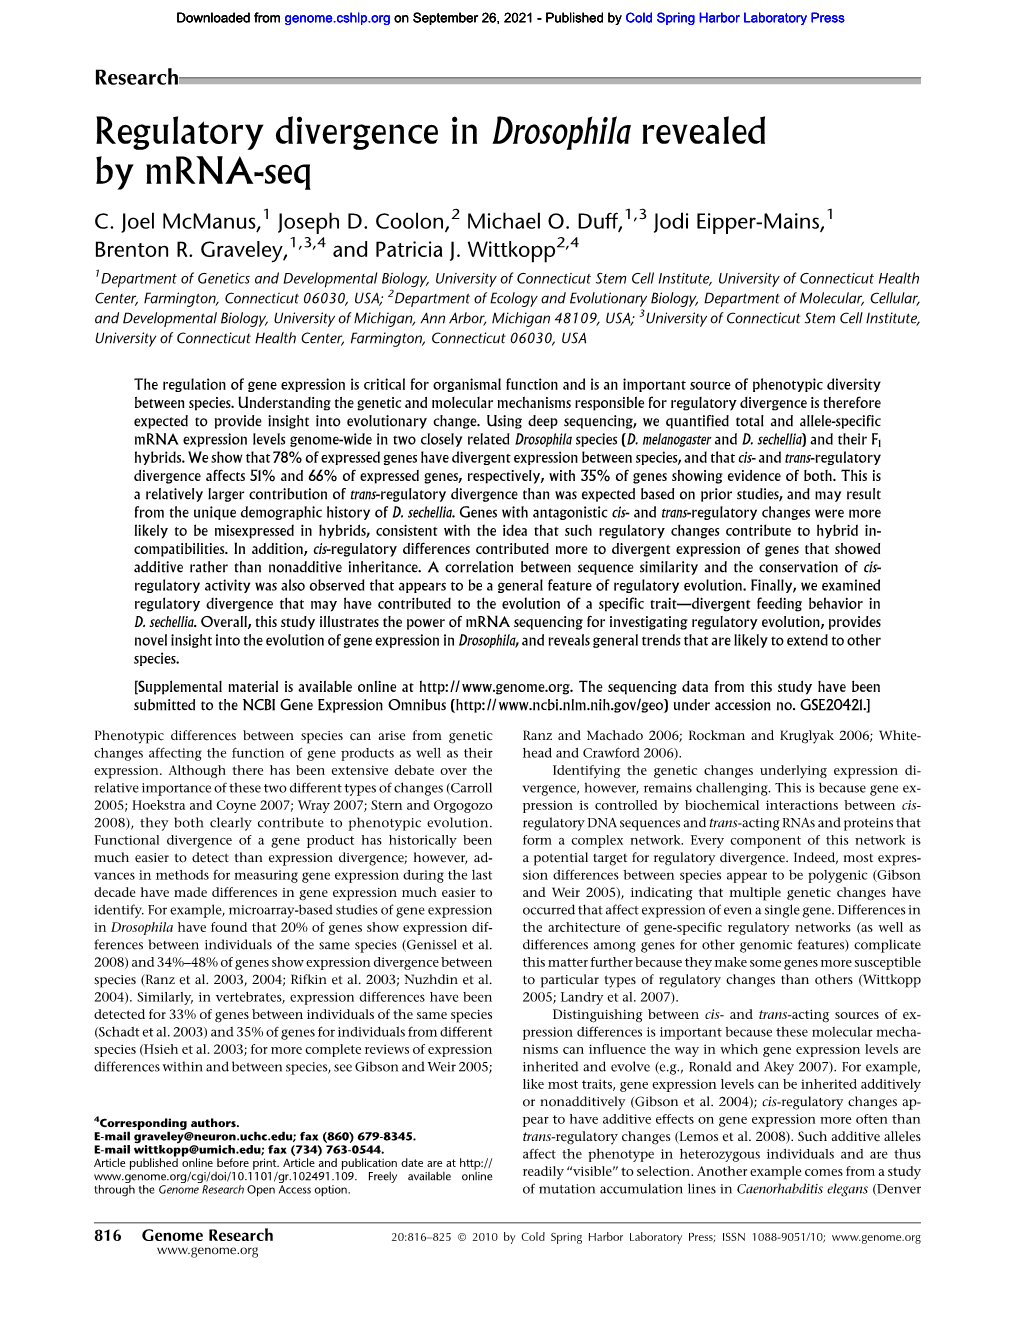 Regulatory Divergence in Drosophila Revealed by Mrna-Seq